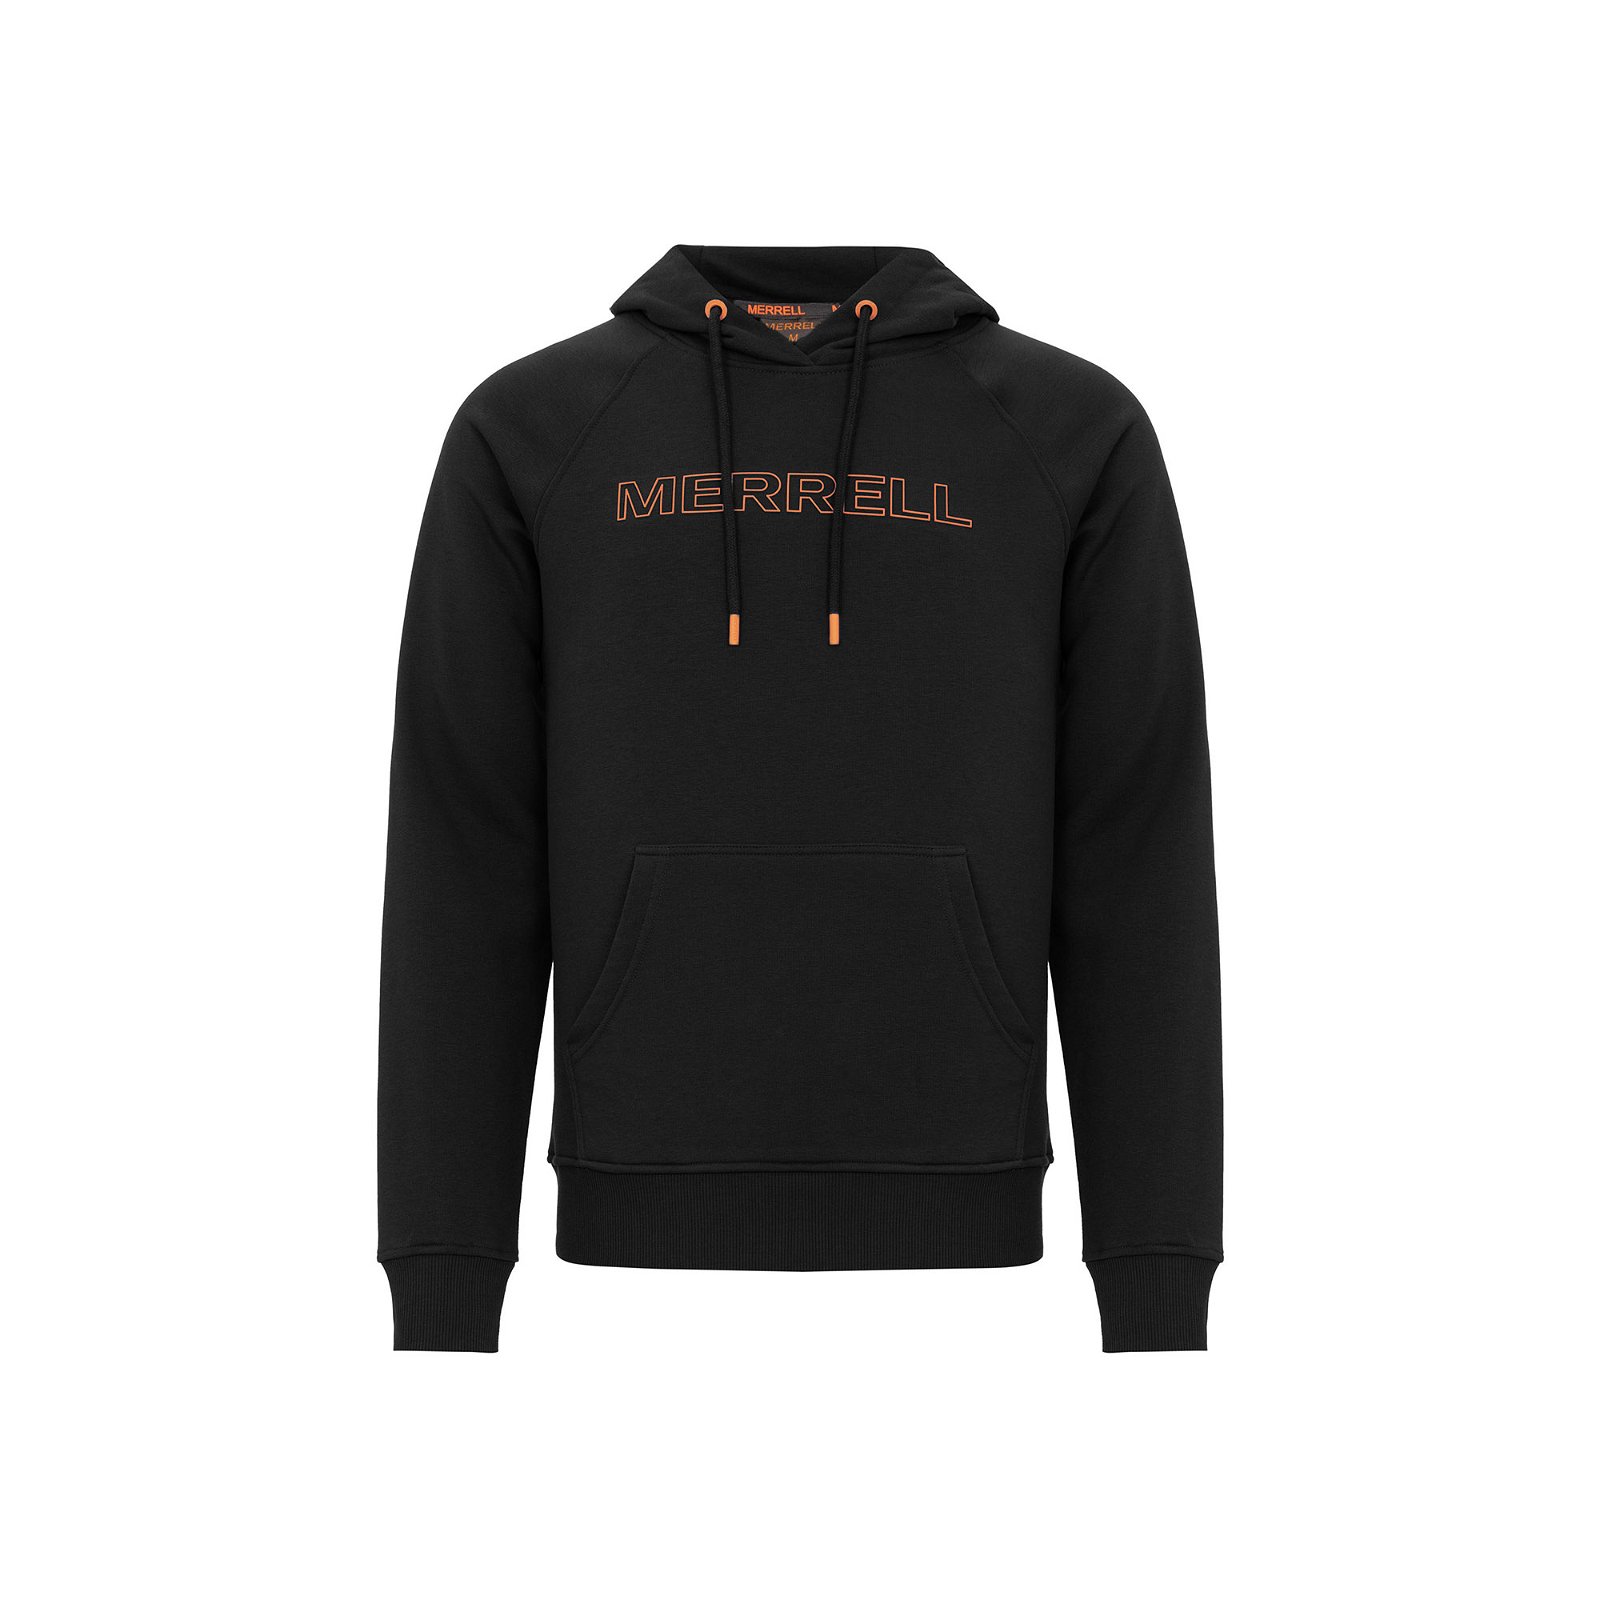 Merrell Subject Erkek Sweatshirt - Siyah - 1